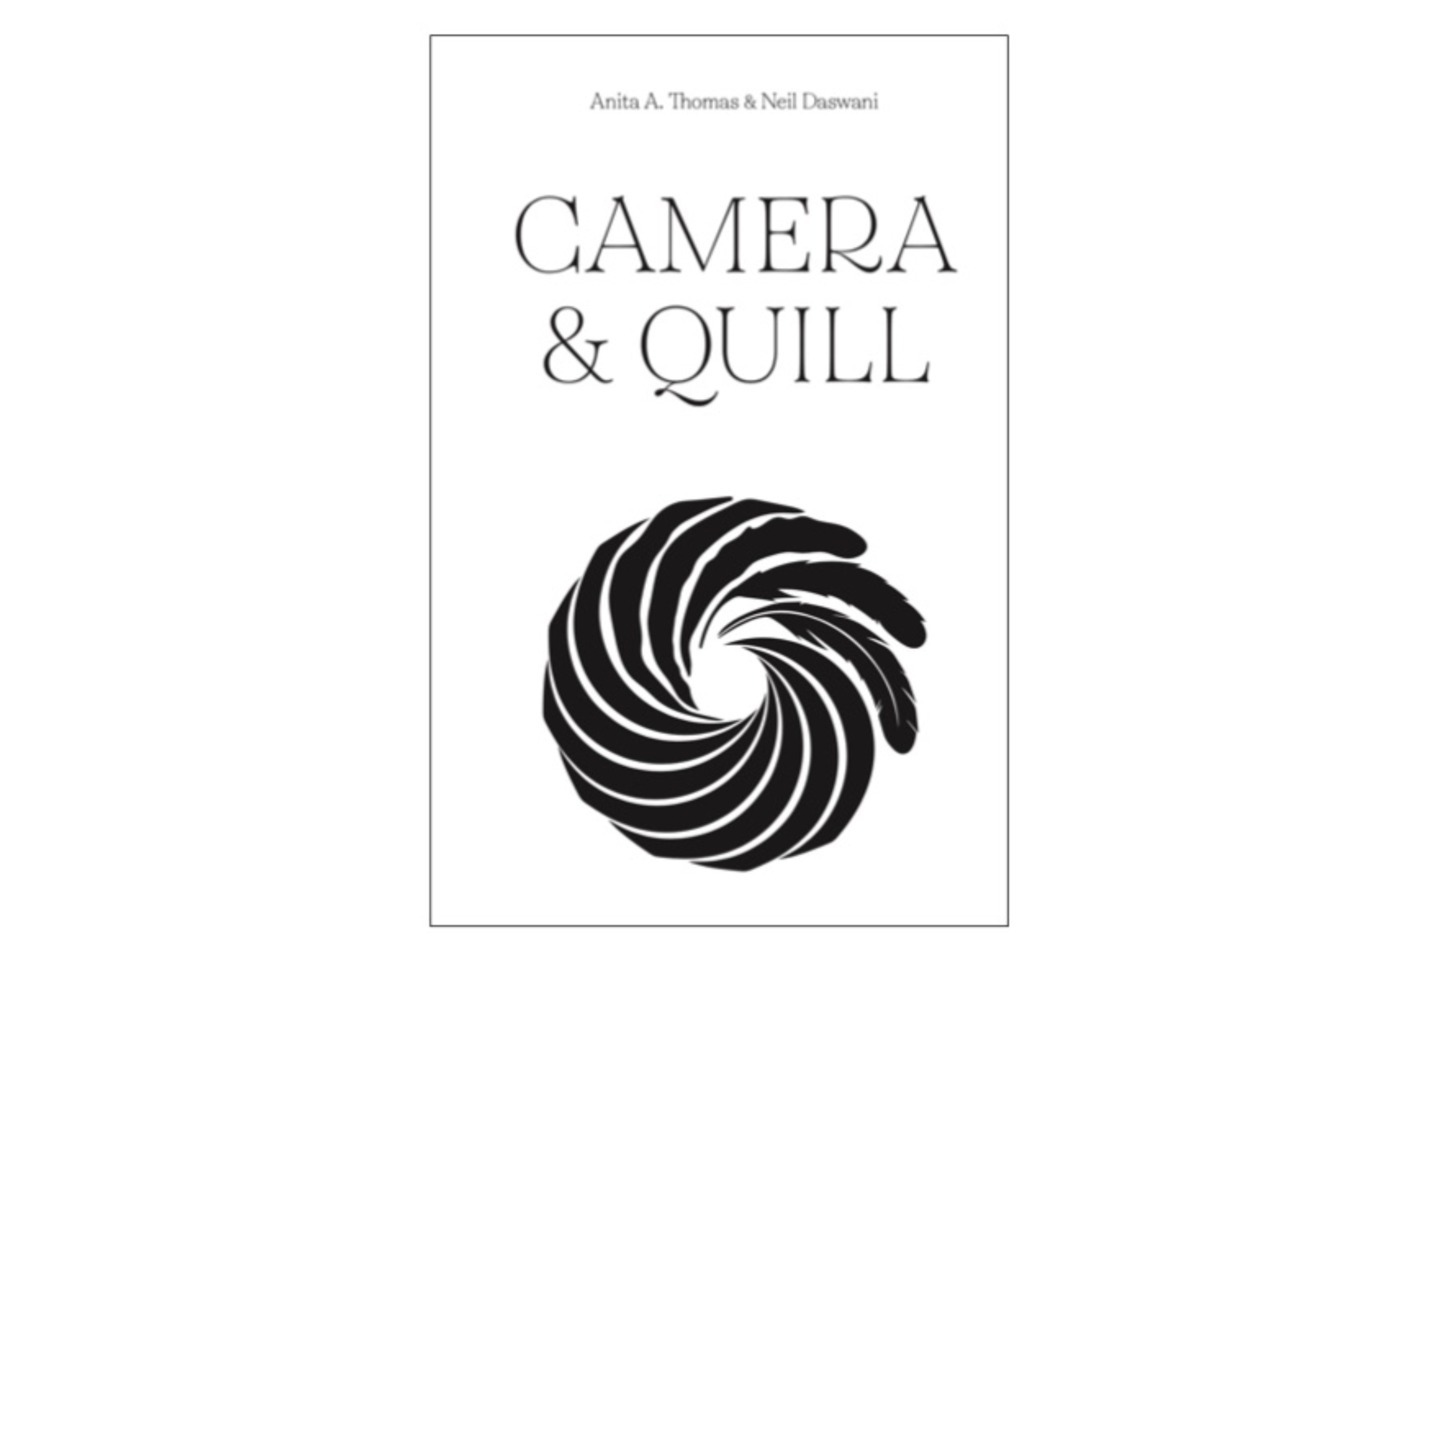 Camera & Quill by Anita A. Thomas & Neil Daswani